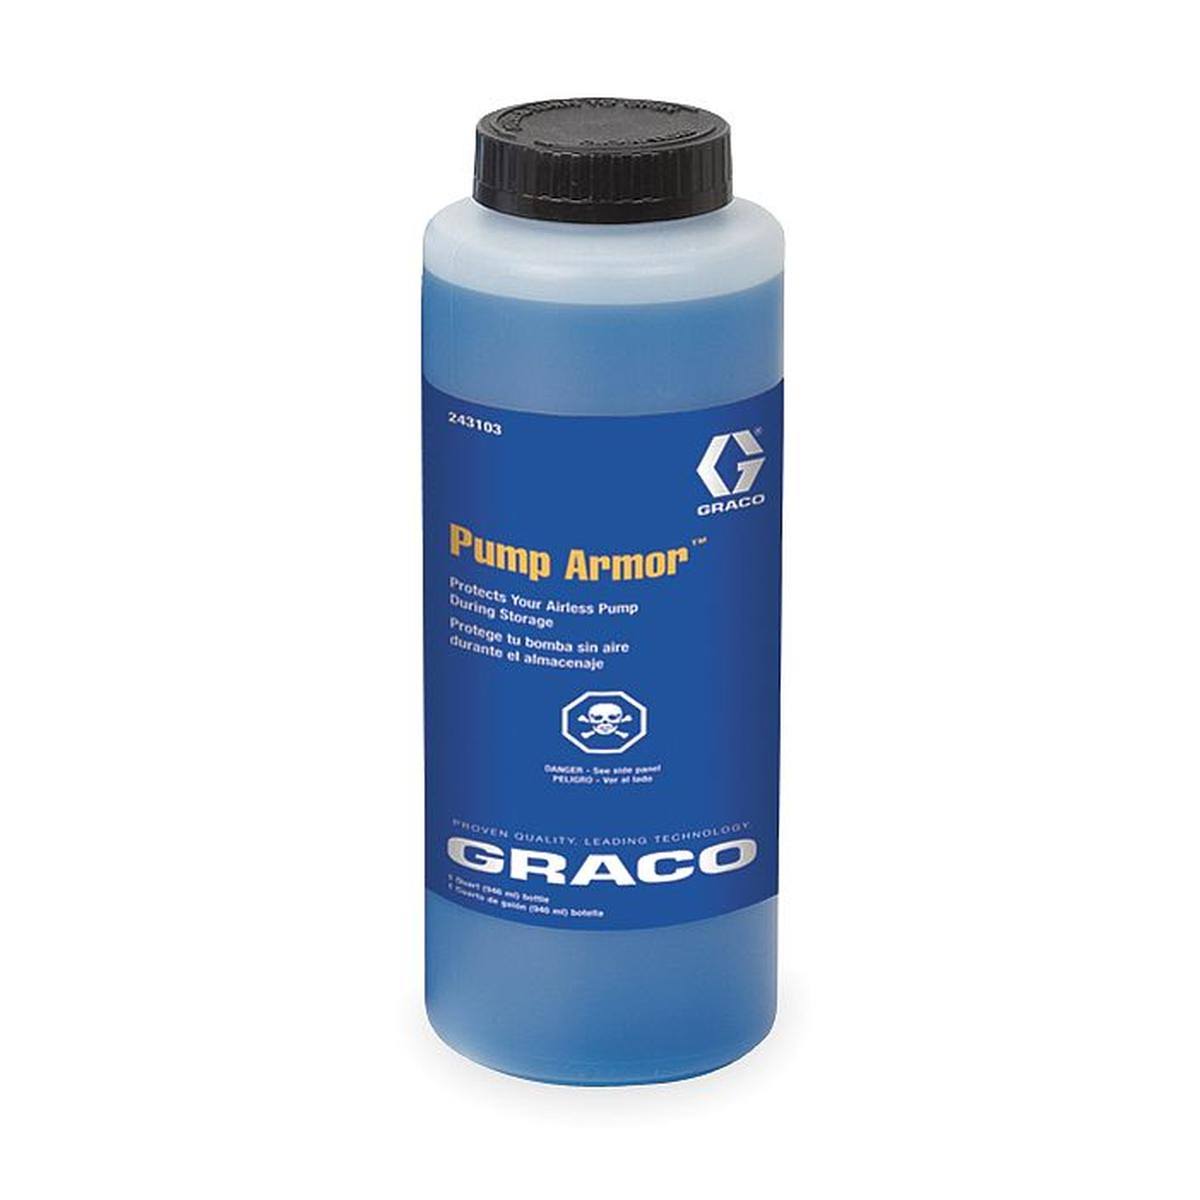 Graco 243103 Pump Armor Storage Fluid - for Airless Paint Spray Guns, 32oz